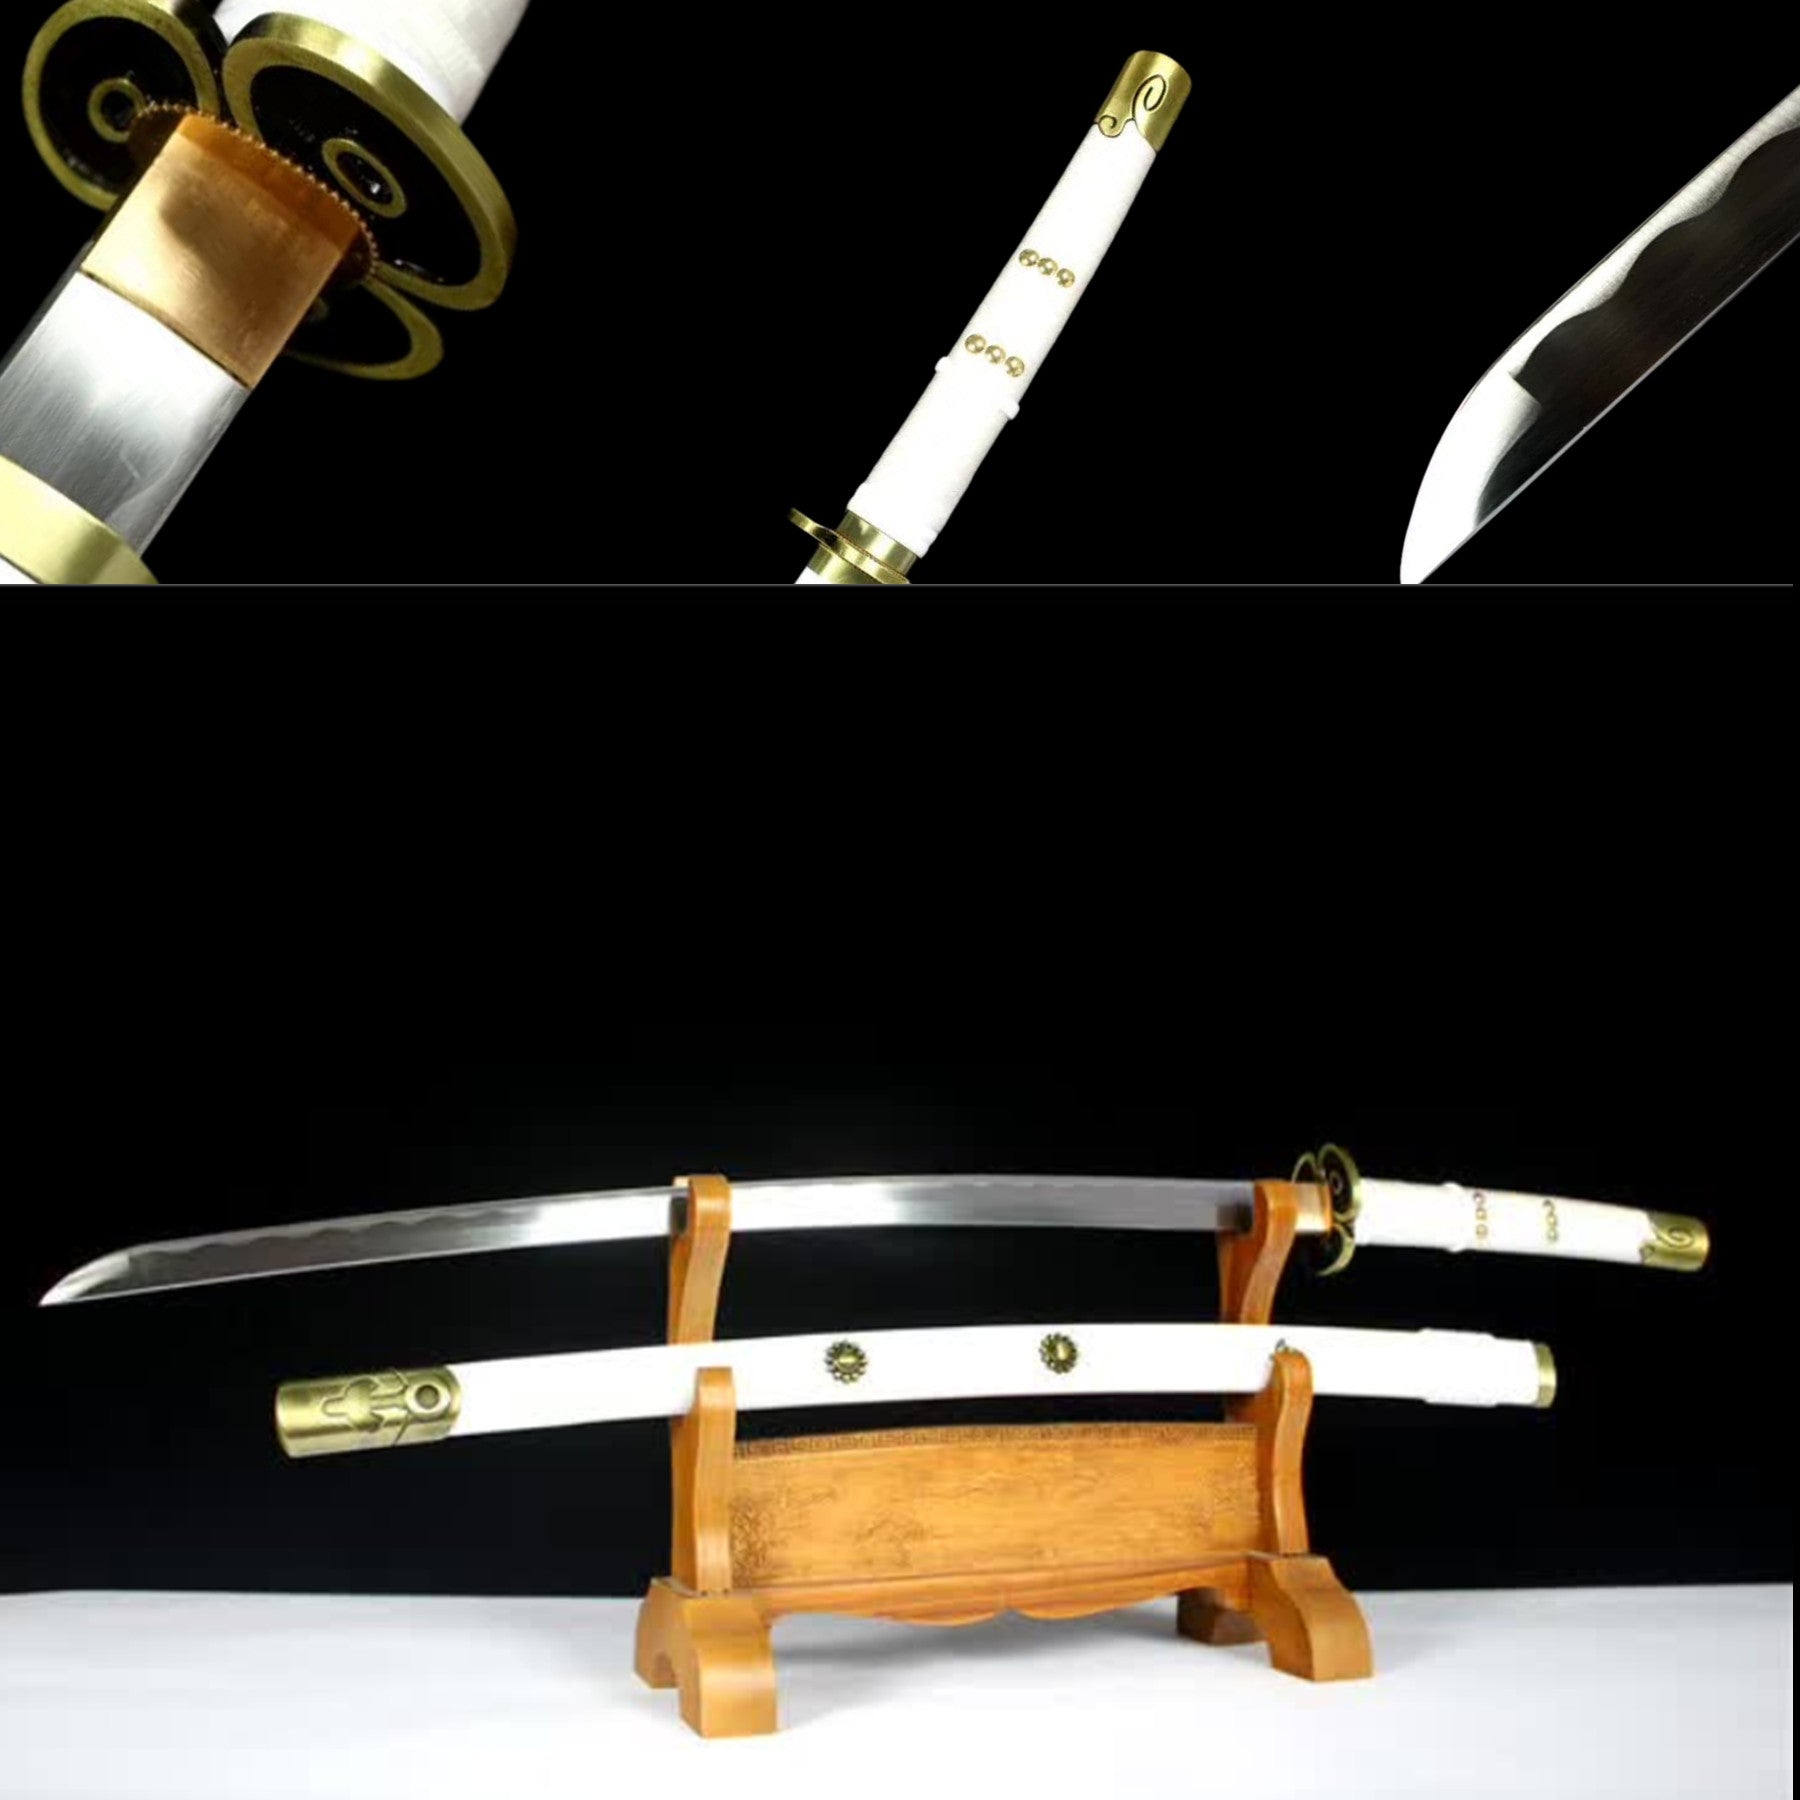 Handmade Anime Katana Sword One Piece Law Anime Cosplay Real Samurai Sword  High Manganese Steel Full Tang 